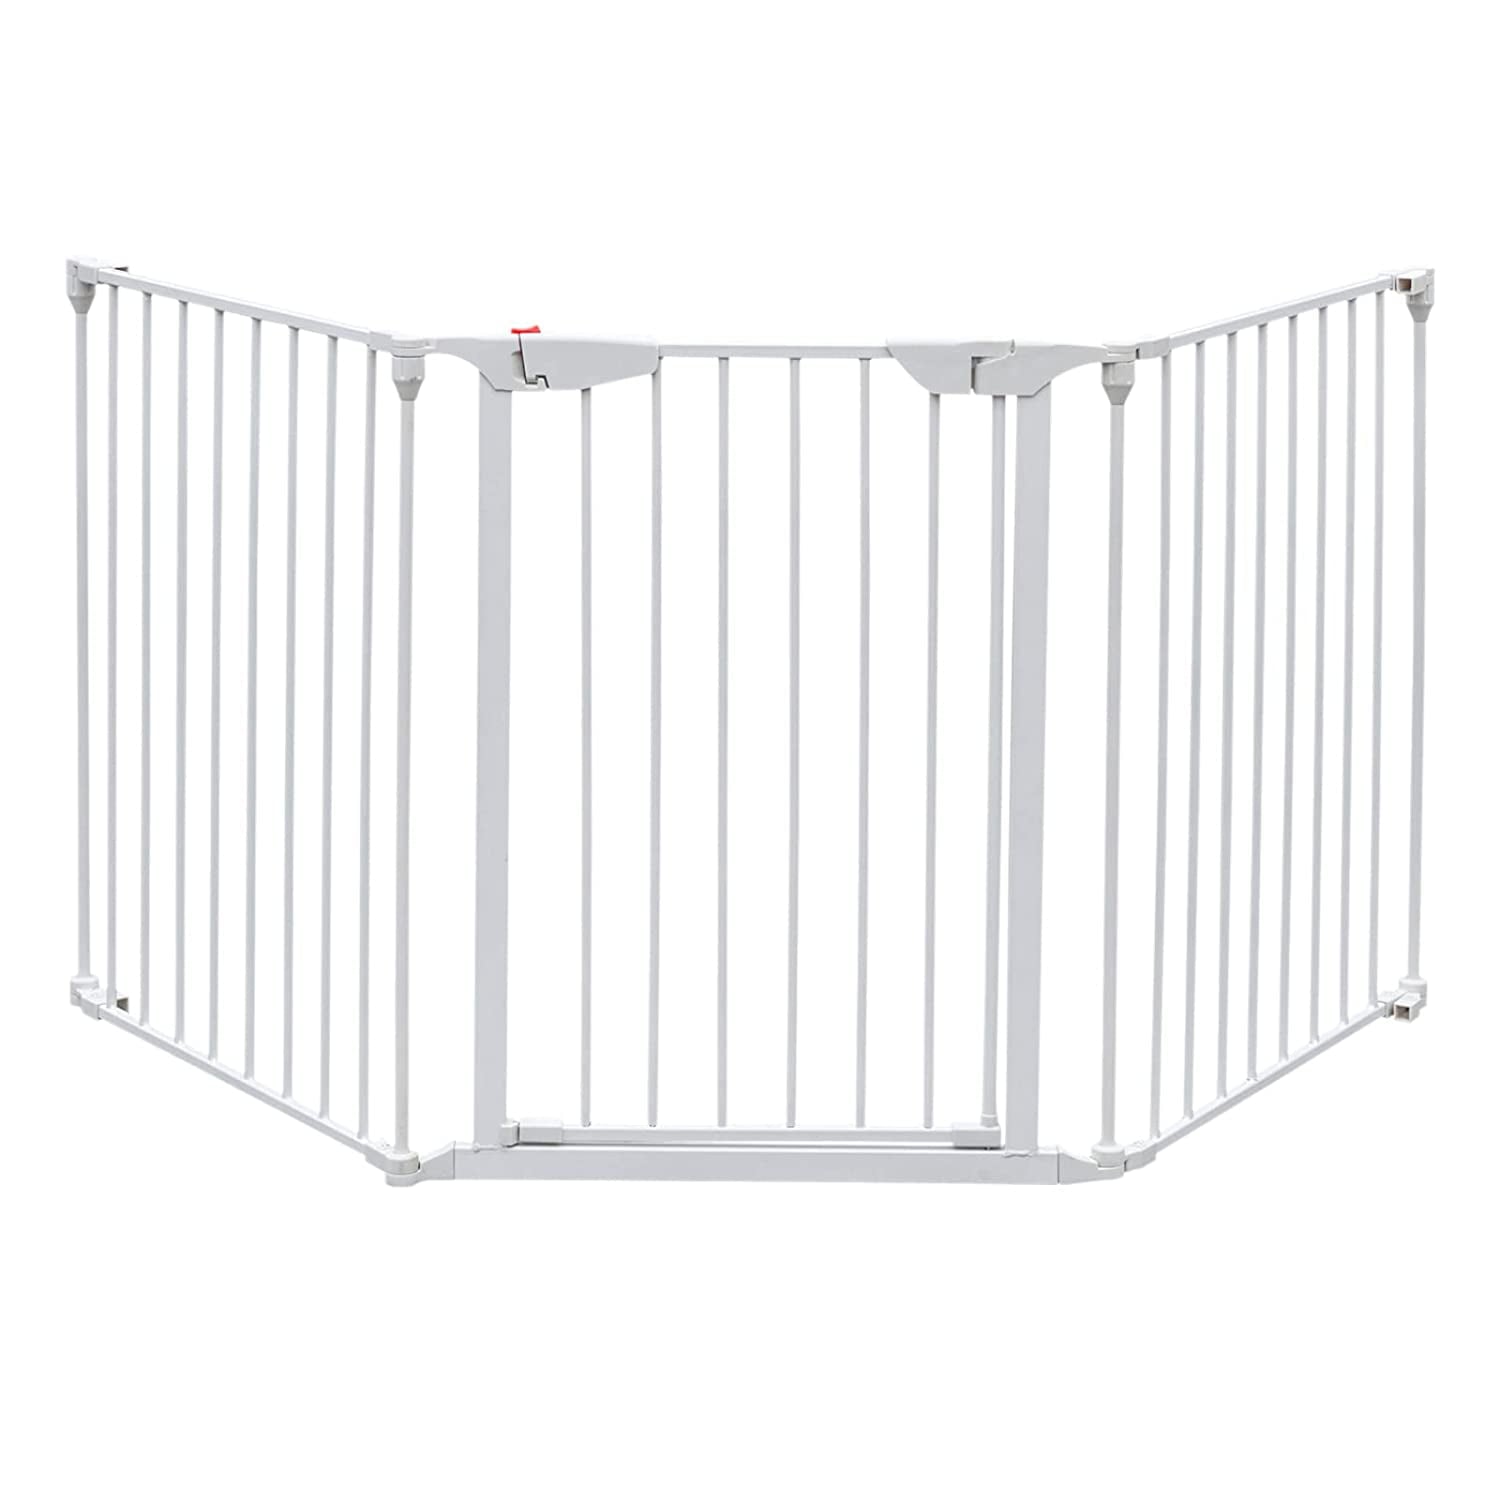 74-Inch Versatile Safety Gate Metal Baby Pet Gate Configurable Dog Barrier - Ideal for Wide Door Openings， Stairways， Doorways (25.39